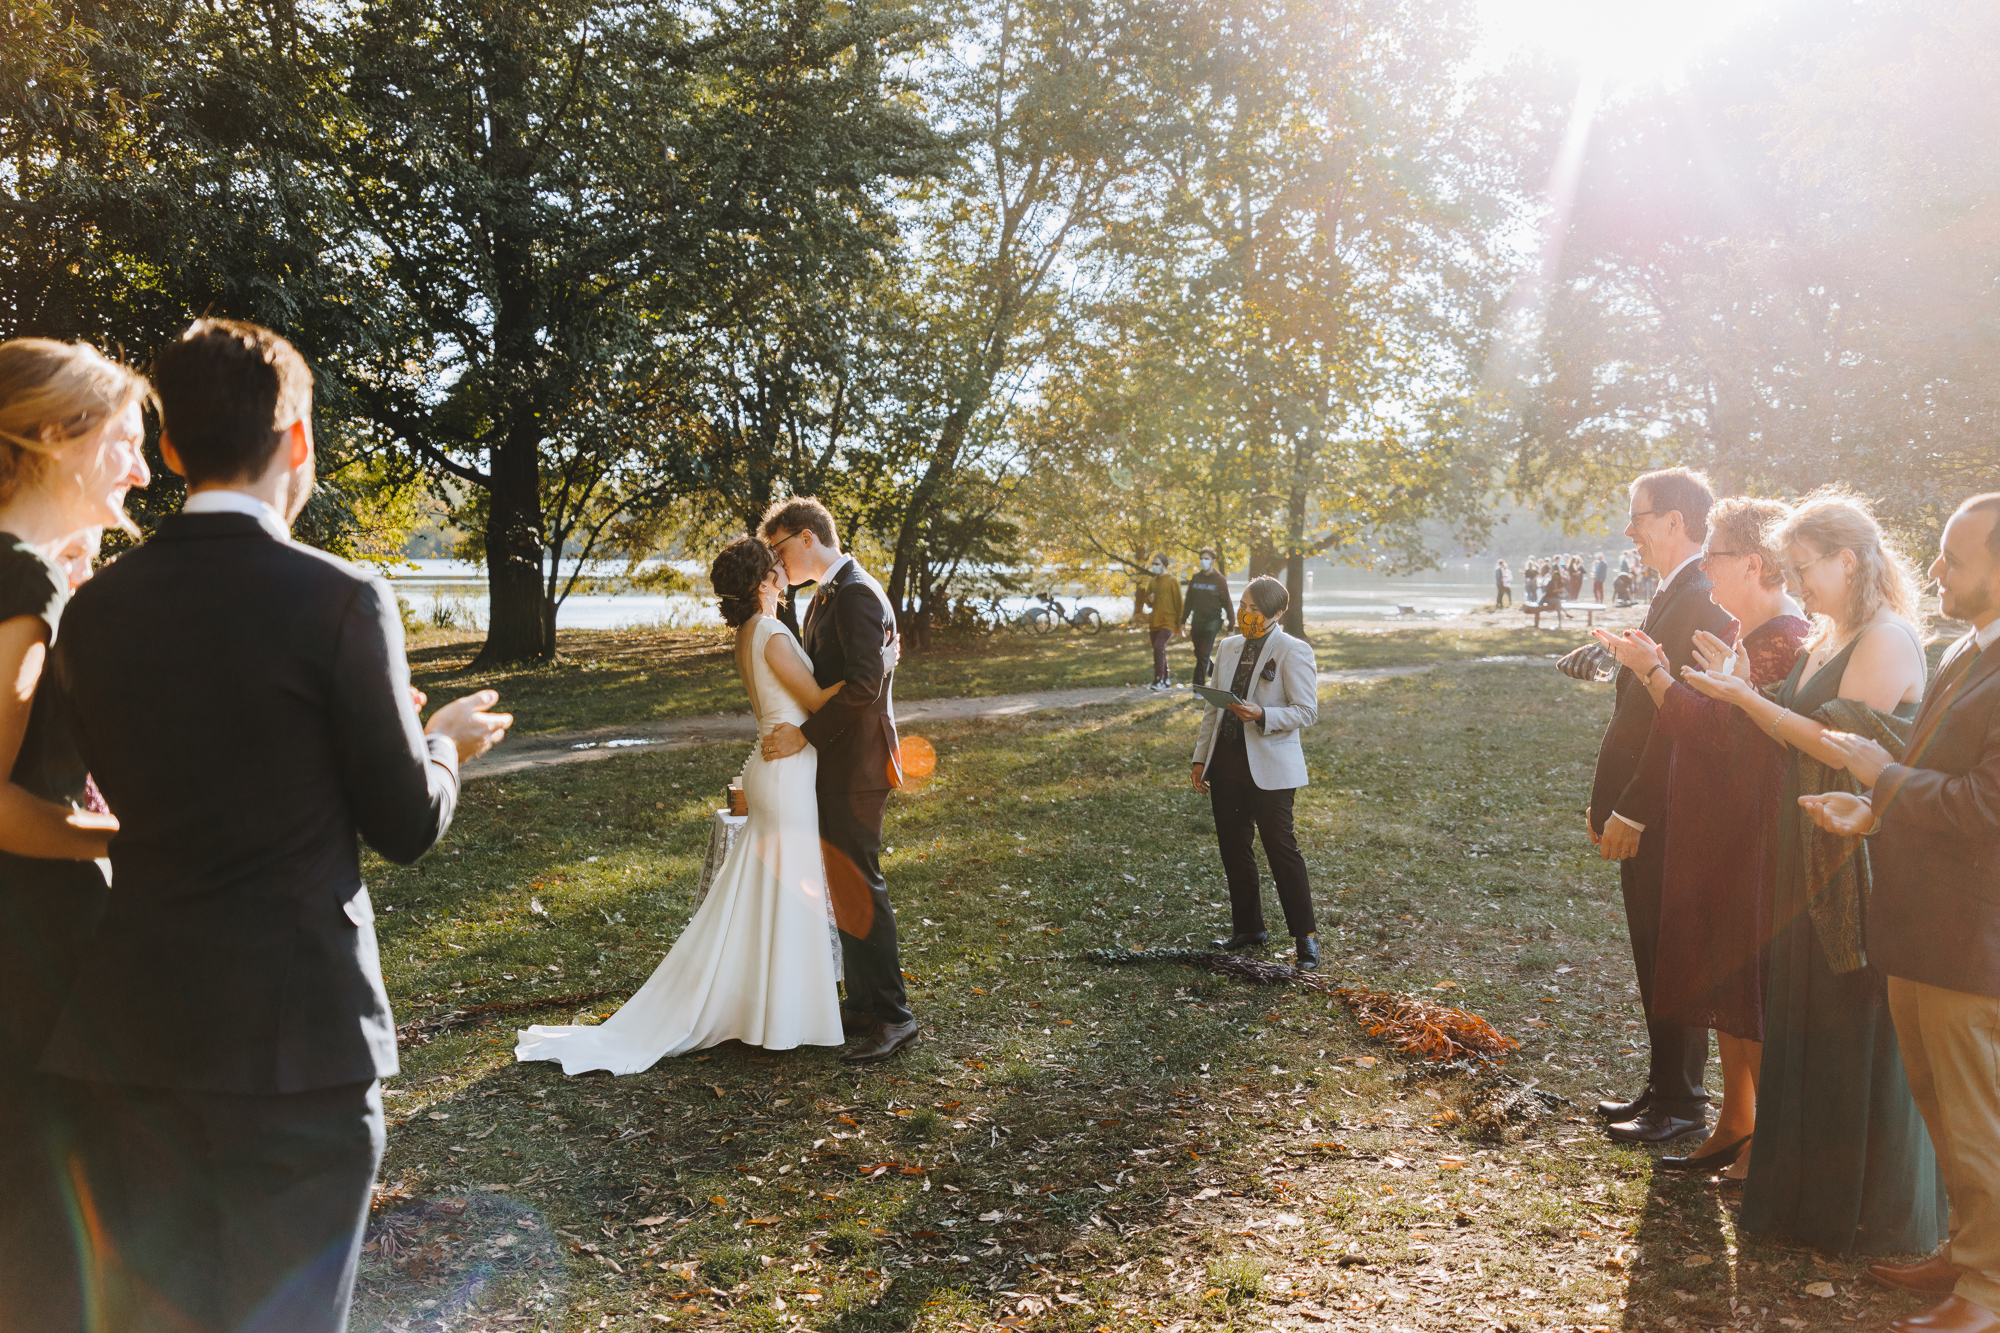 Autumn wedding photos in Prospect Park